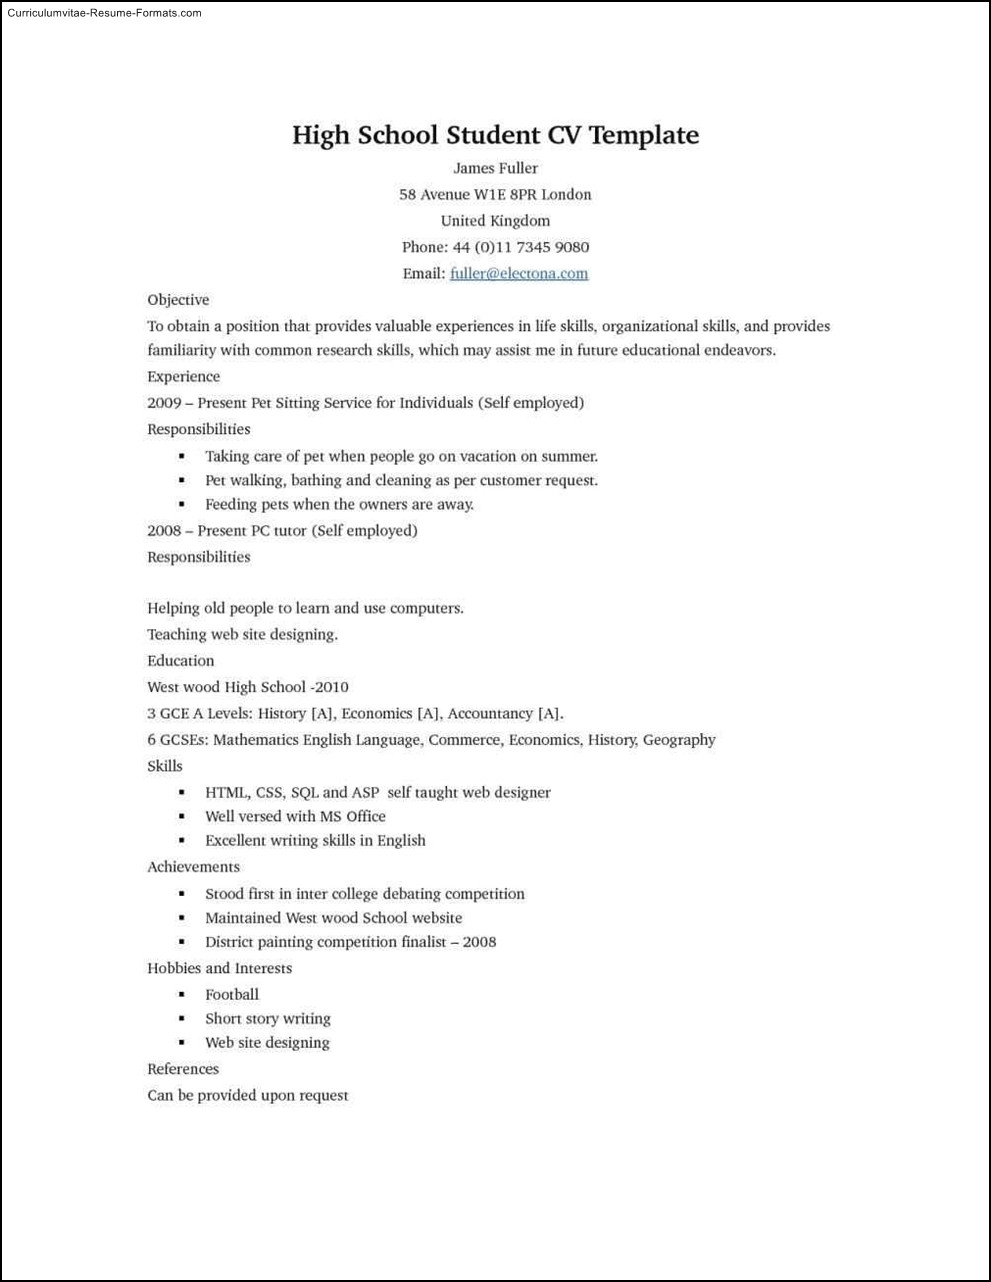 Printable Sample Resume for High School Student High School Student Resume Template